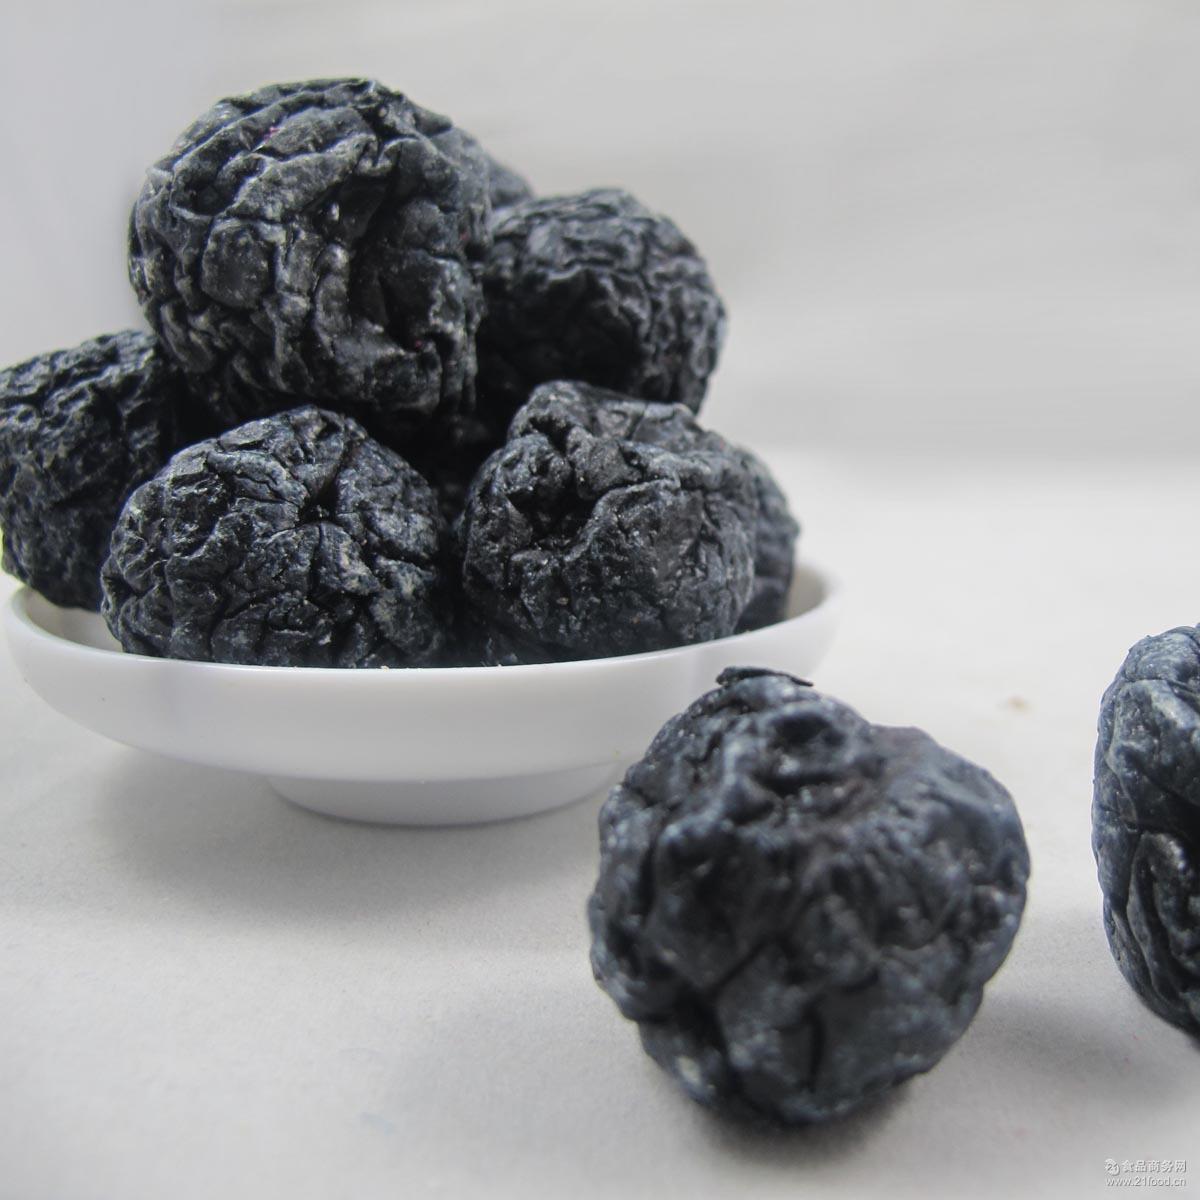 Xinjiang specialty snack food dried dark plum